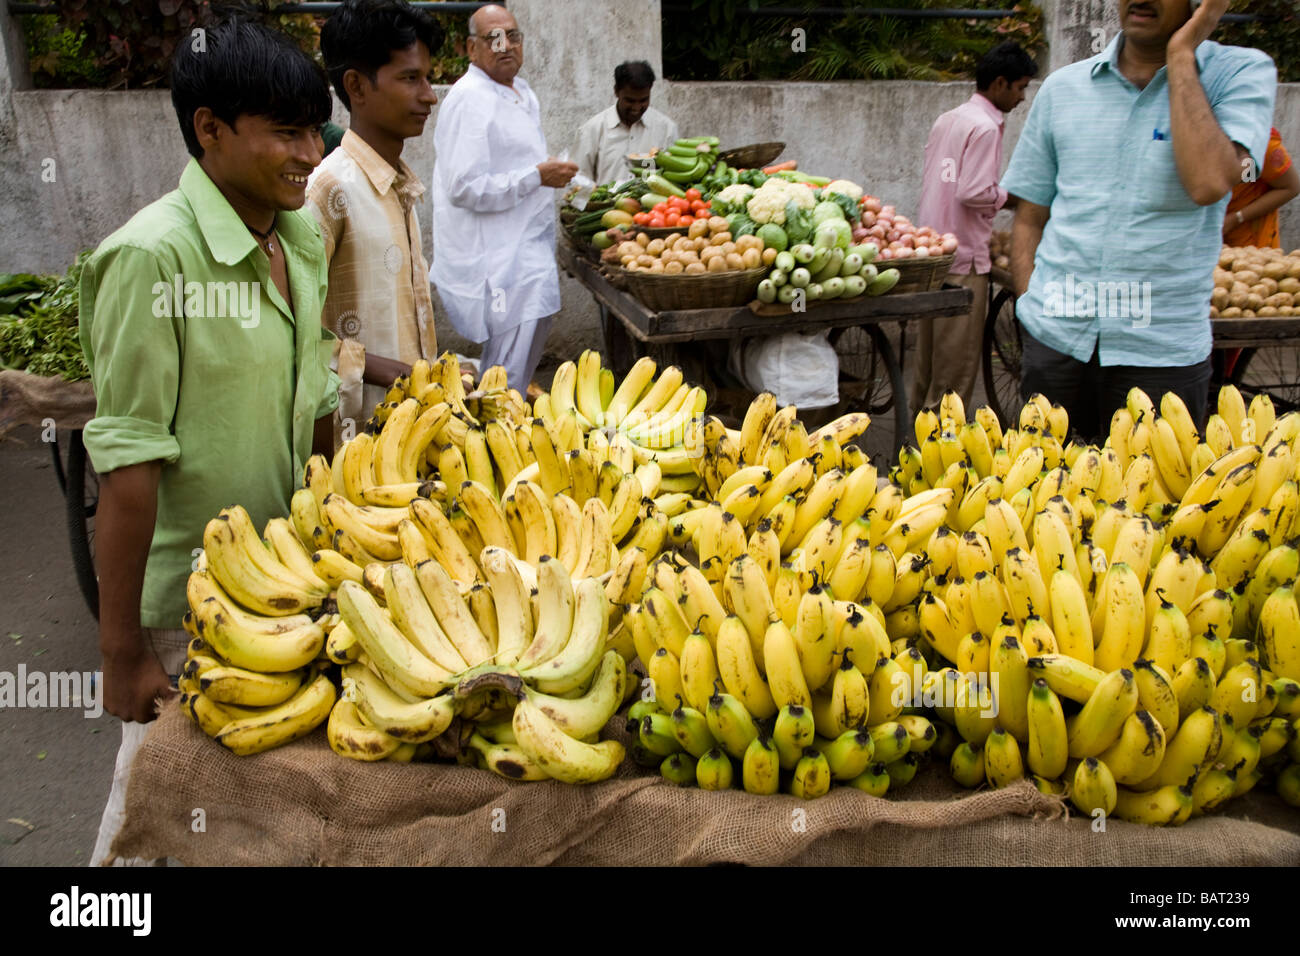 Street market seller with his top quality fresh bananas. Street market stall, Surat, Gujarat. India. Stock Photo